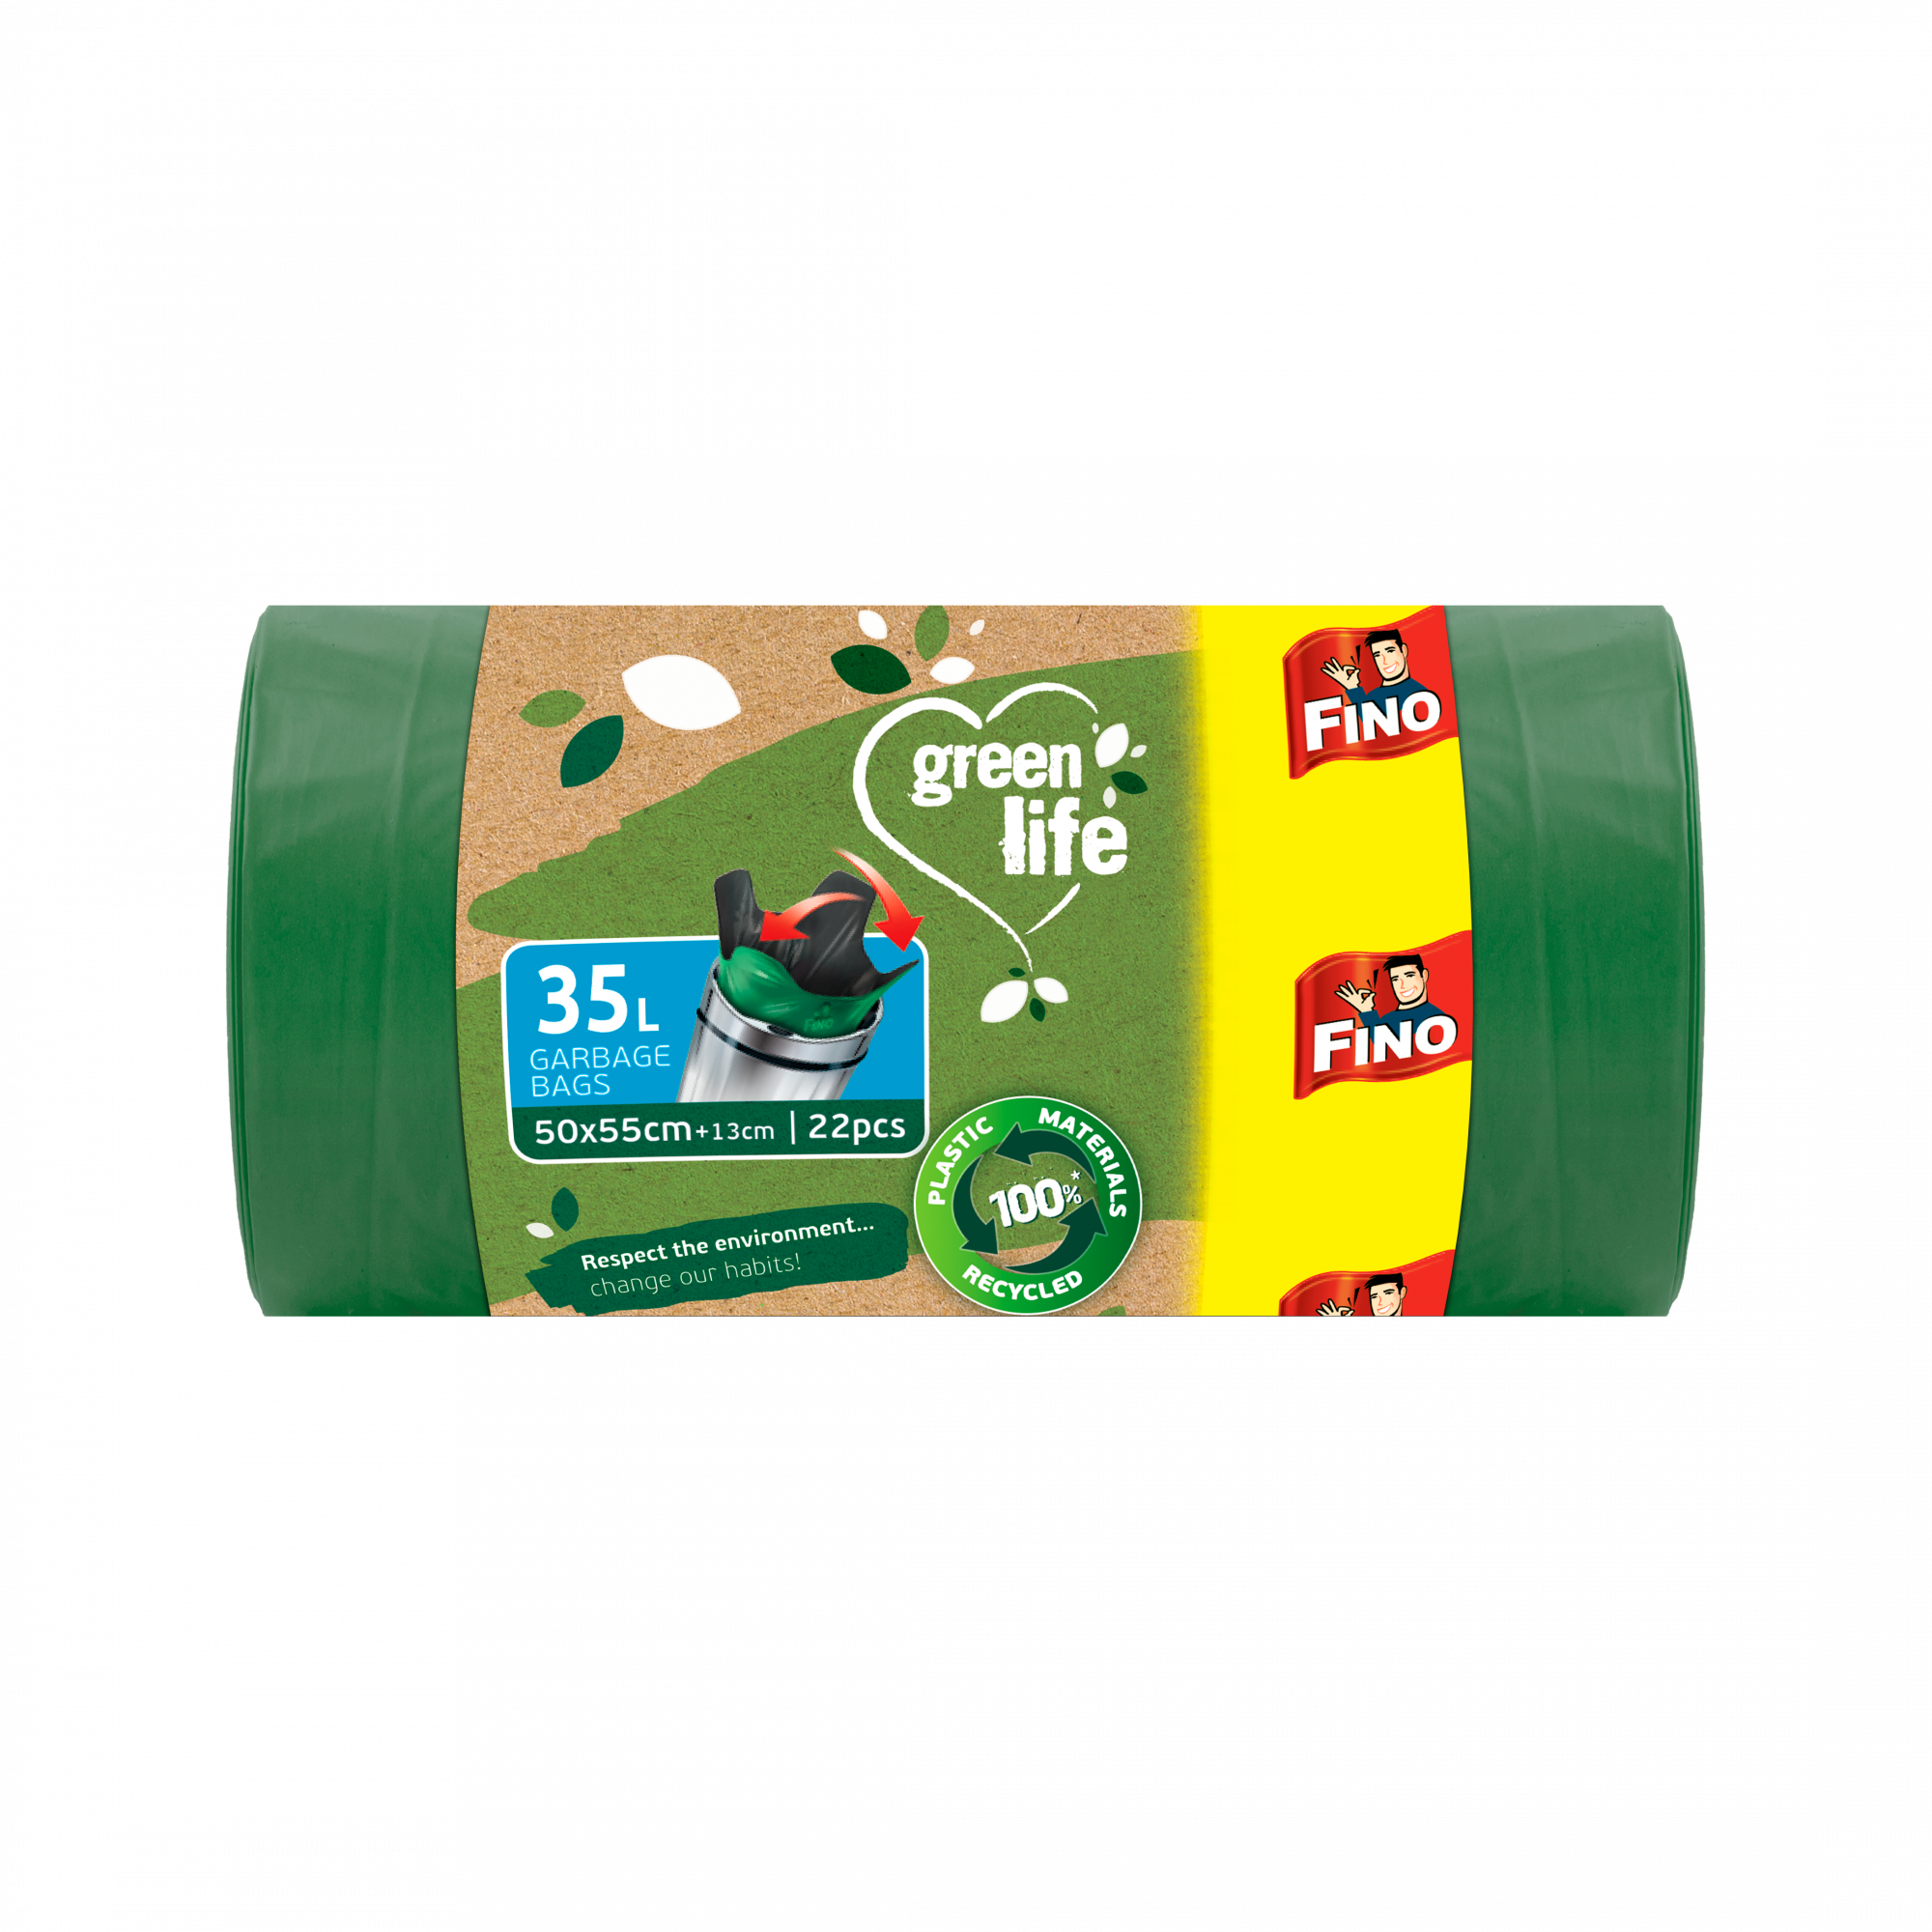 FINO Pytle na odpadky Green Life Easy pack 25 μm - 35 l (22 ks) - II. jakost FINO